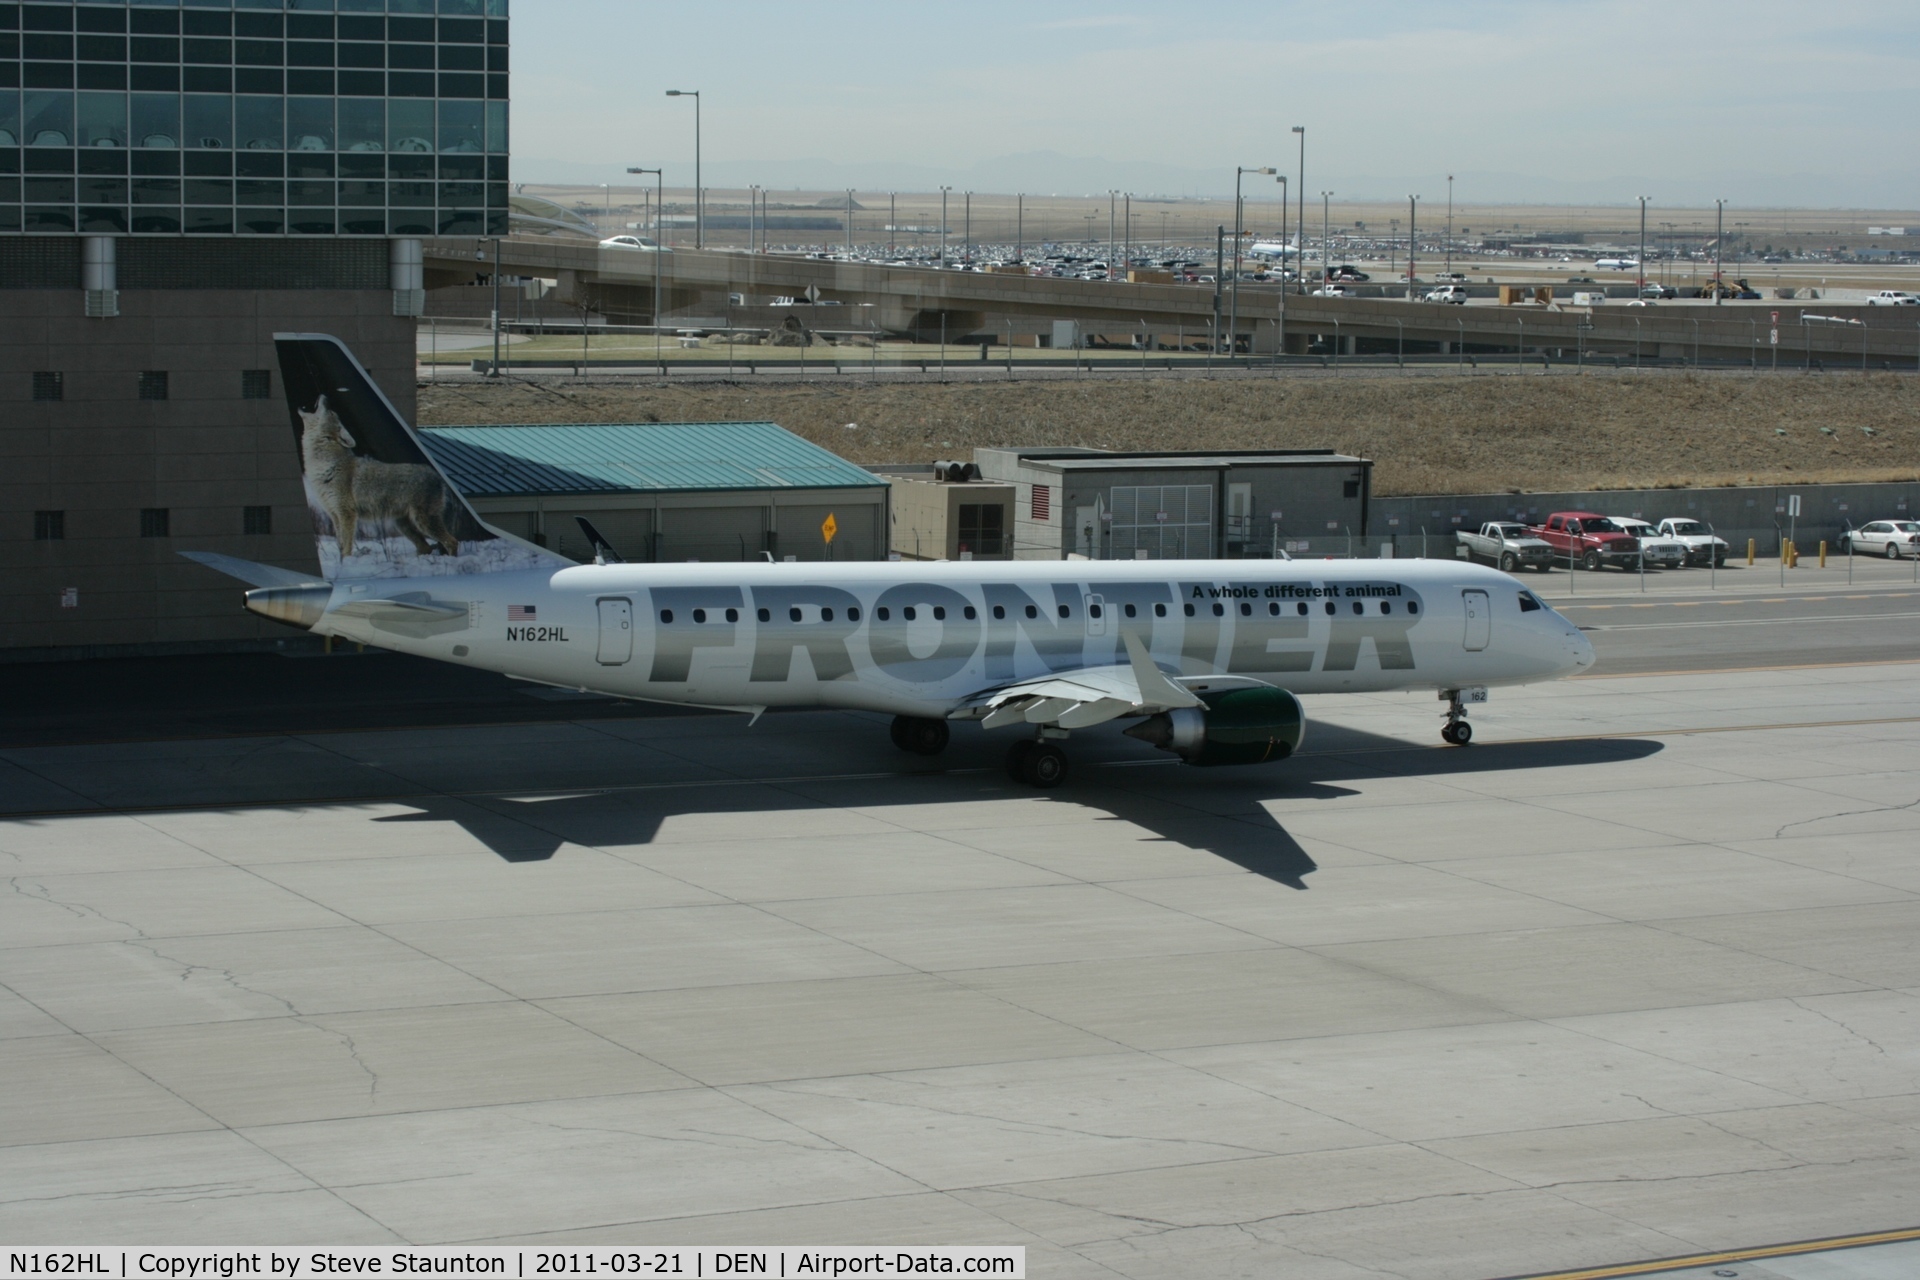 N162HL, 2008 Embraer 190AR (ERJ-190-100IGW) C/N 19000231, Taken at Denver International Airport, in March 2011 whilst on an Aeroprint Aviation tour